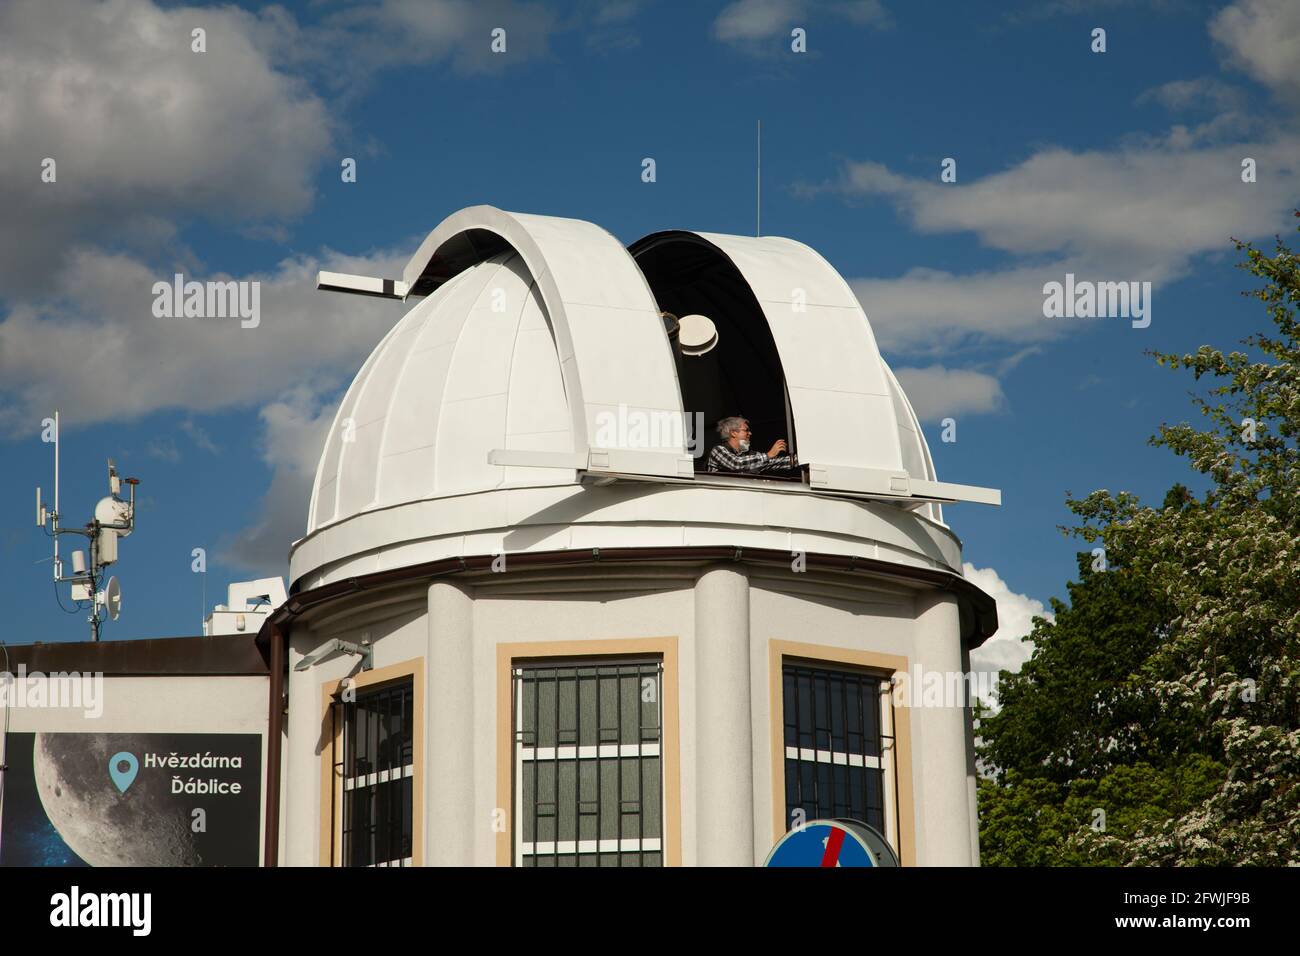 Observatory in part of Prague in Dablice, Czech Republic Stock Photo